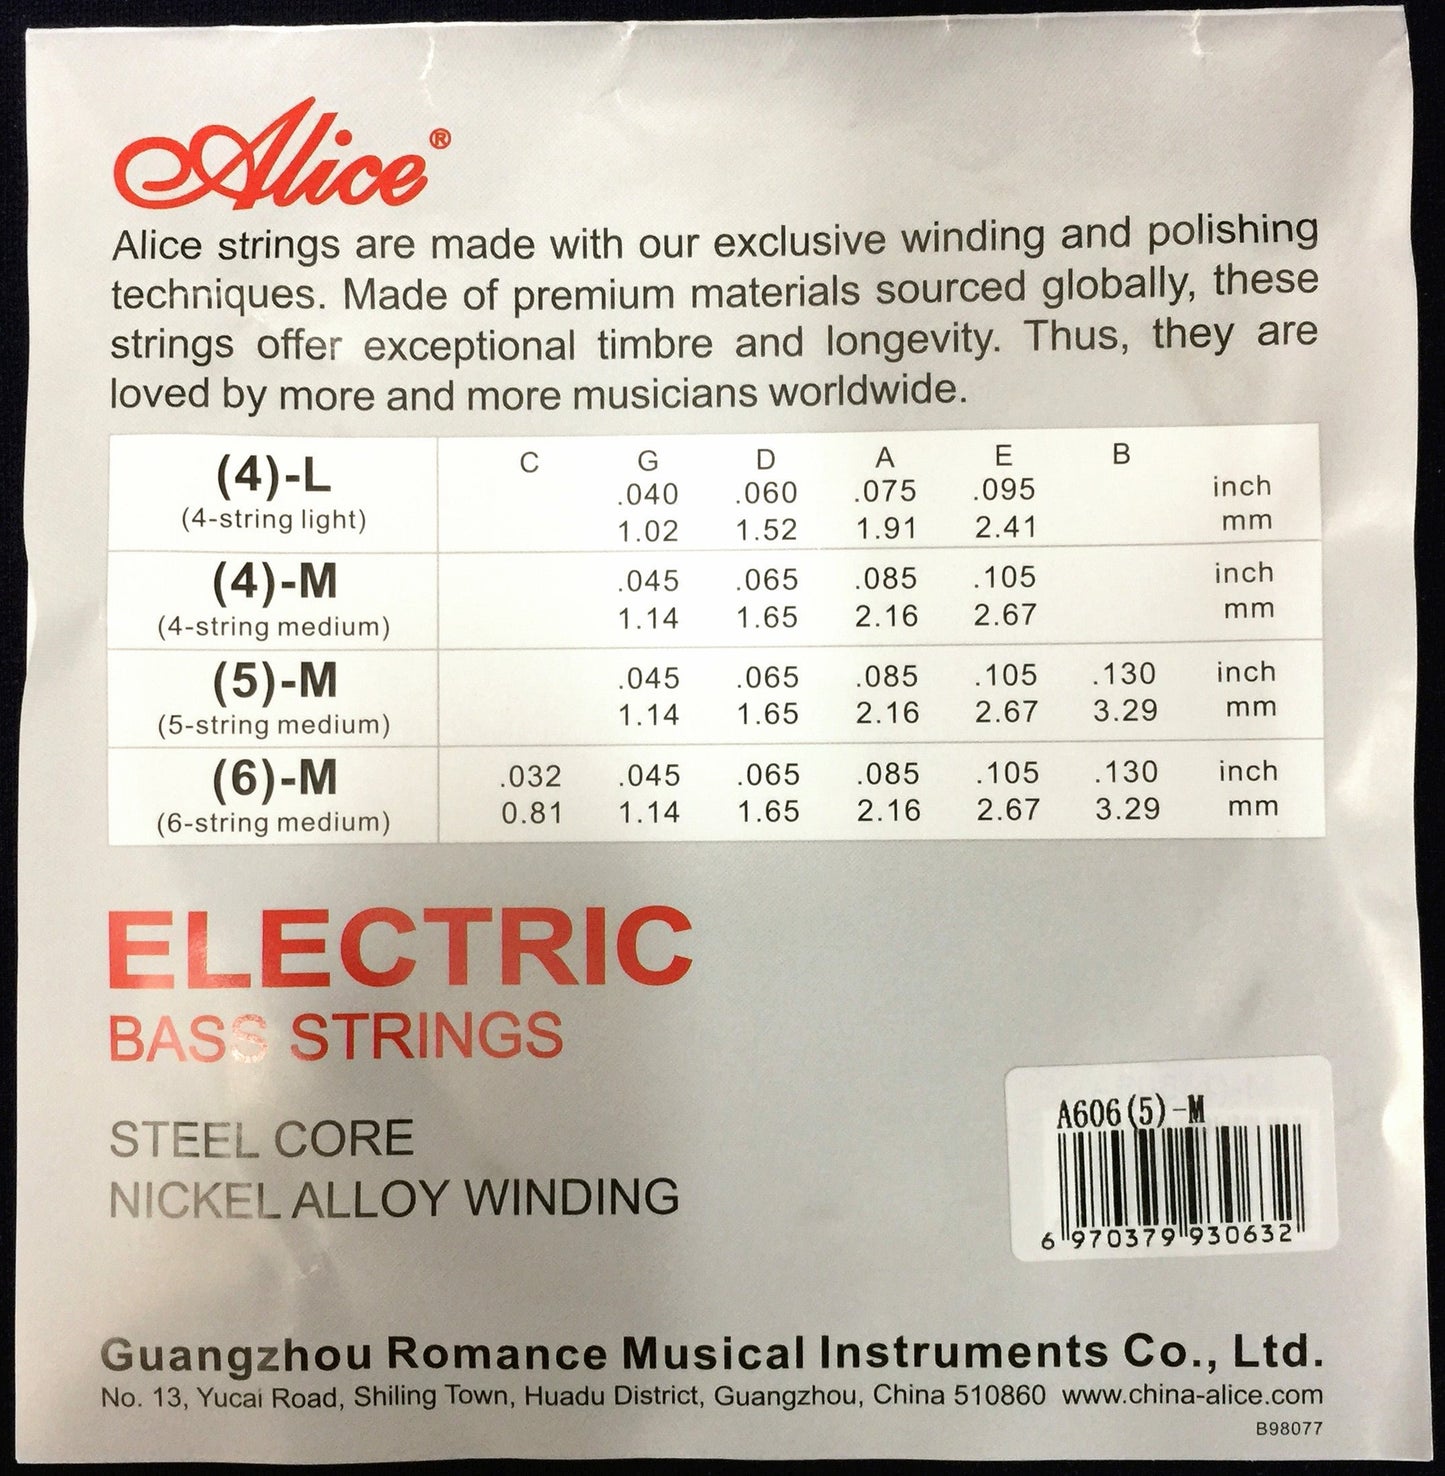 Alice A6065M Electric Bass Guitar Strings Medium -5 strings, .045 ~.130